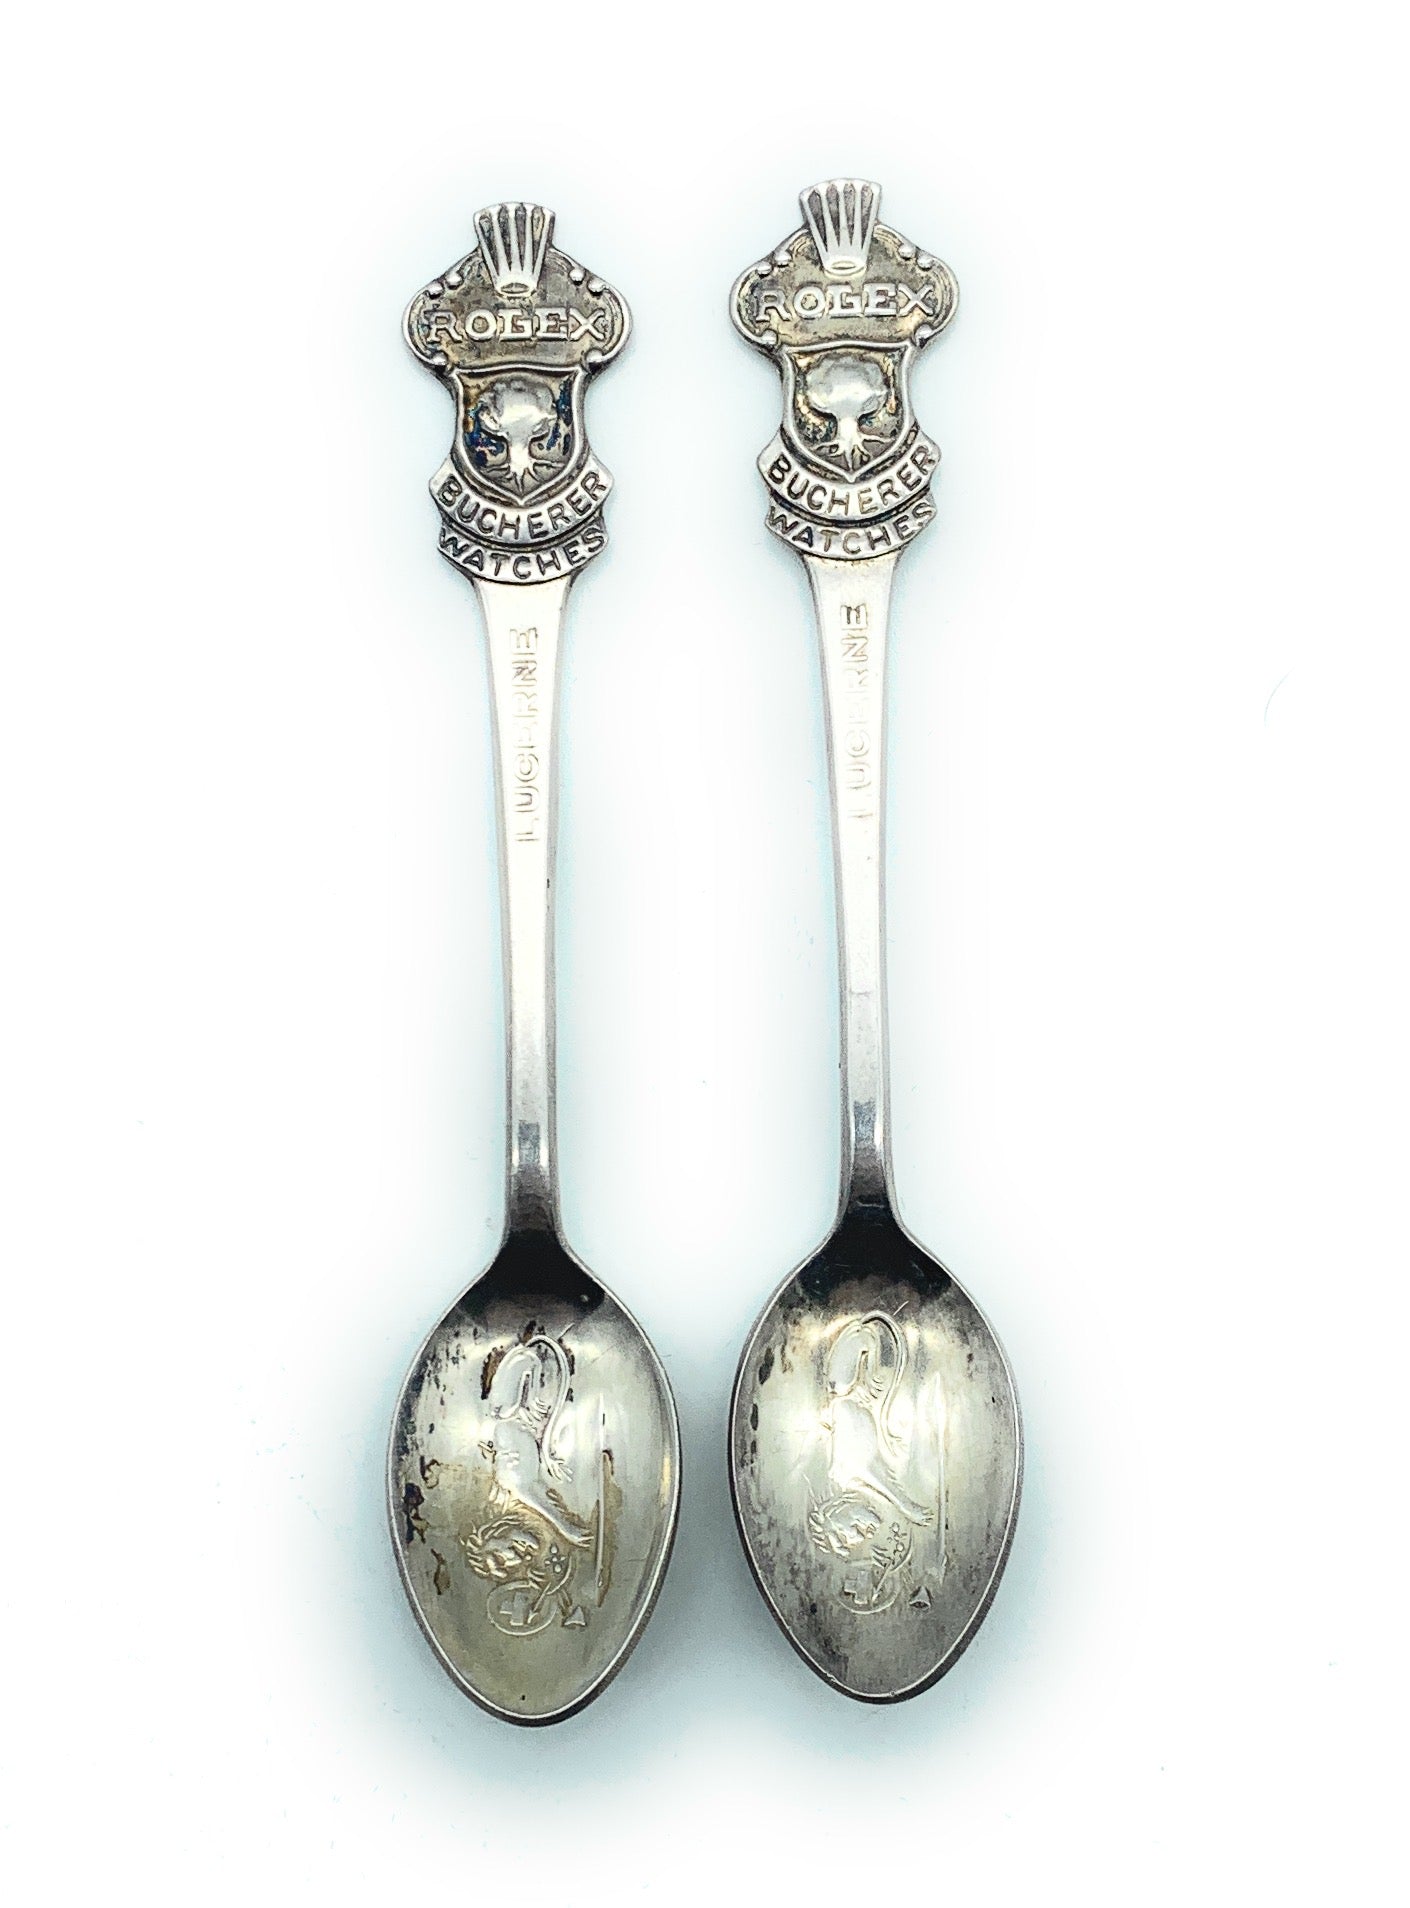 rolex silver spoon